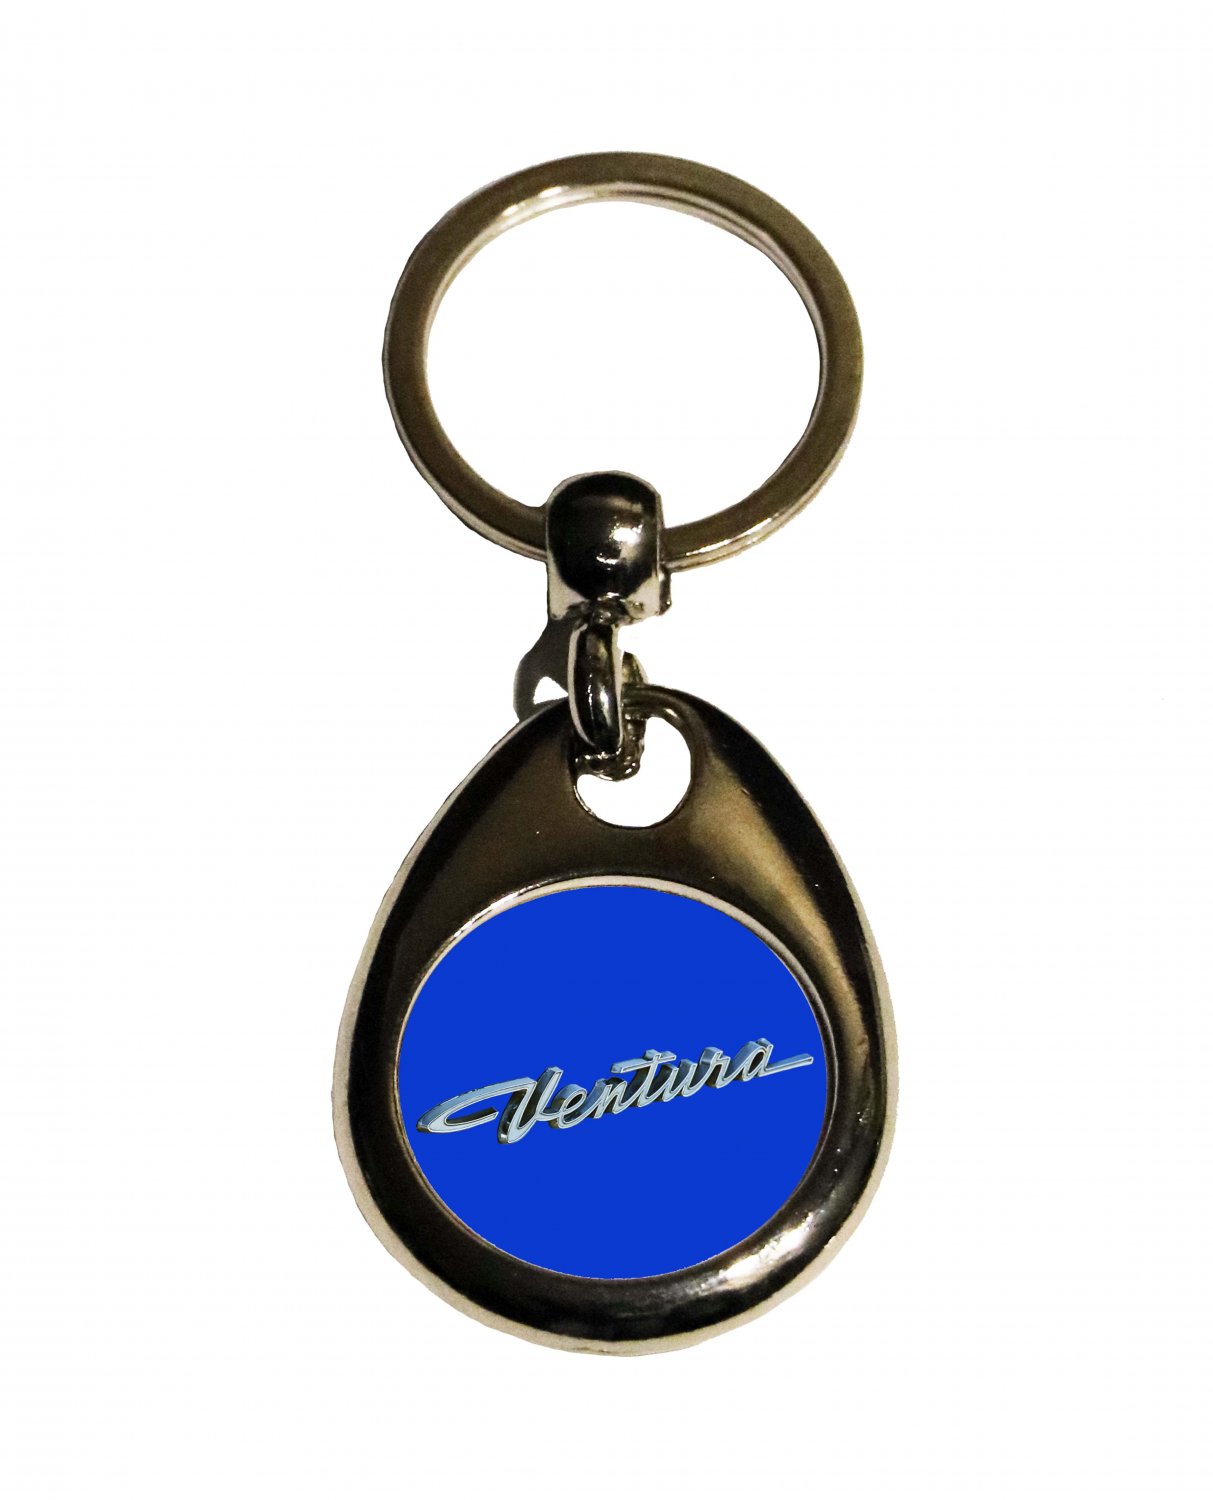 New Pontiac Ventura logo keychain! FREE SHIPPING!